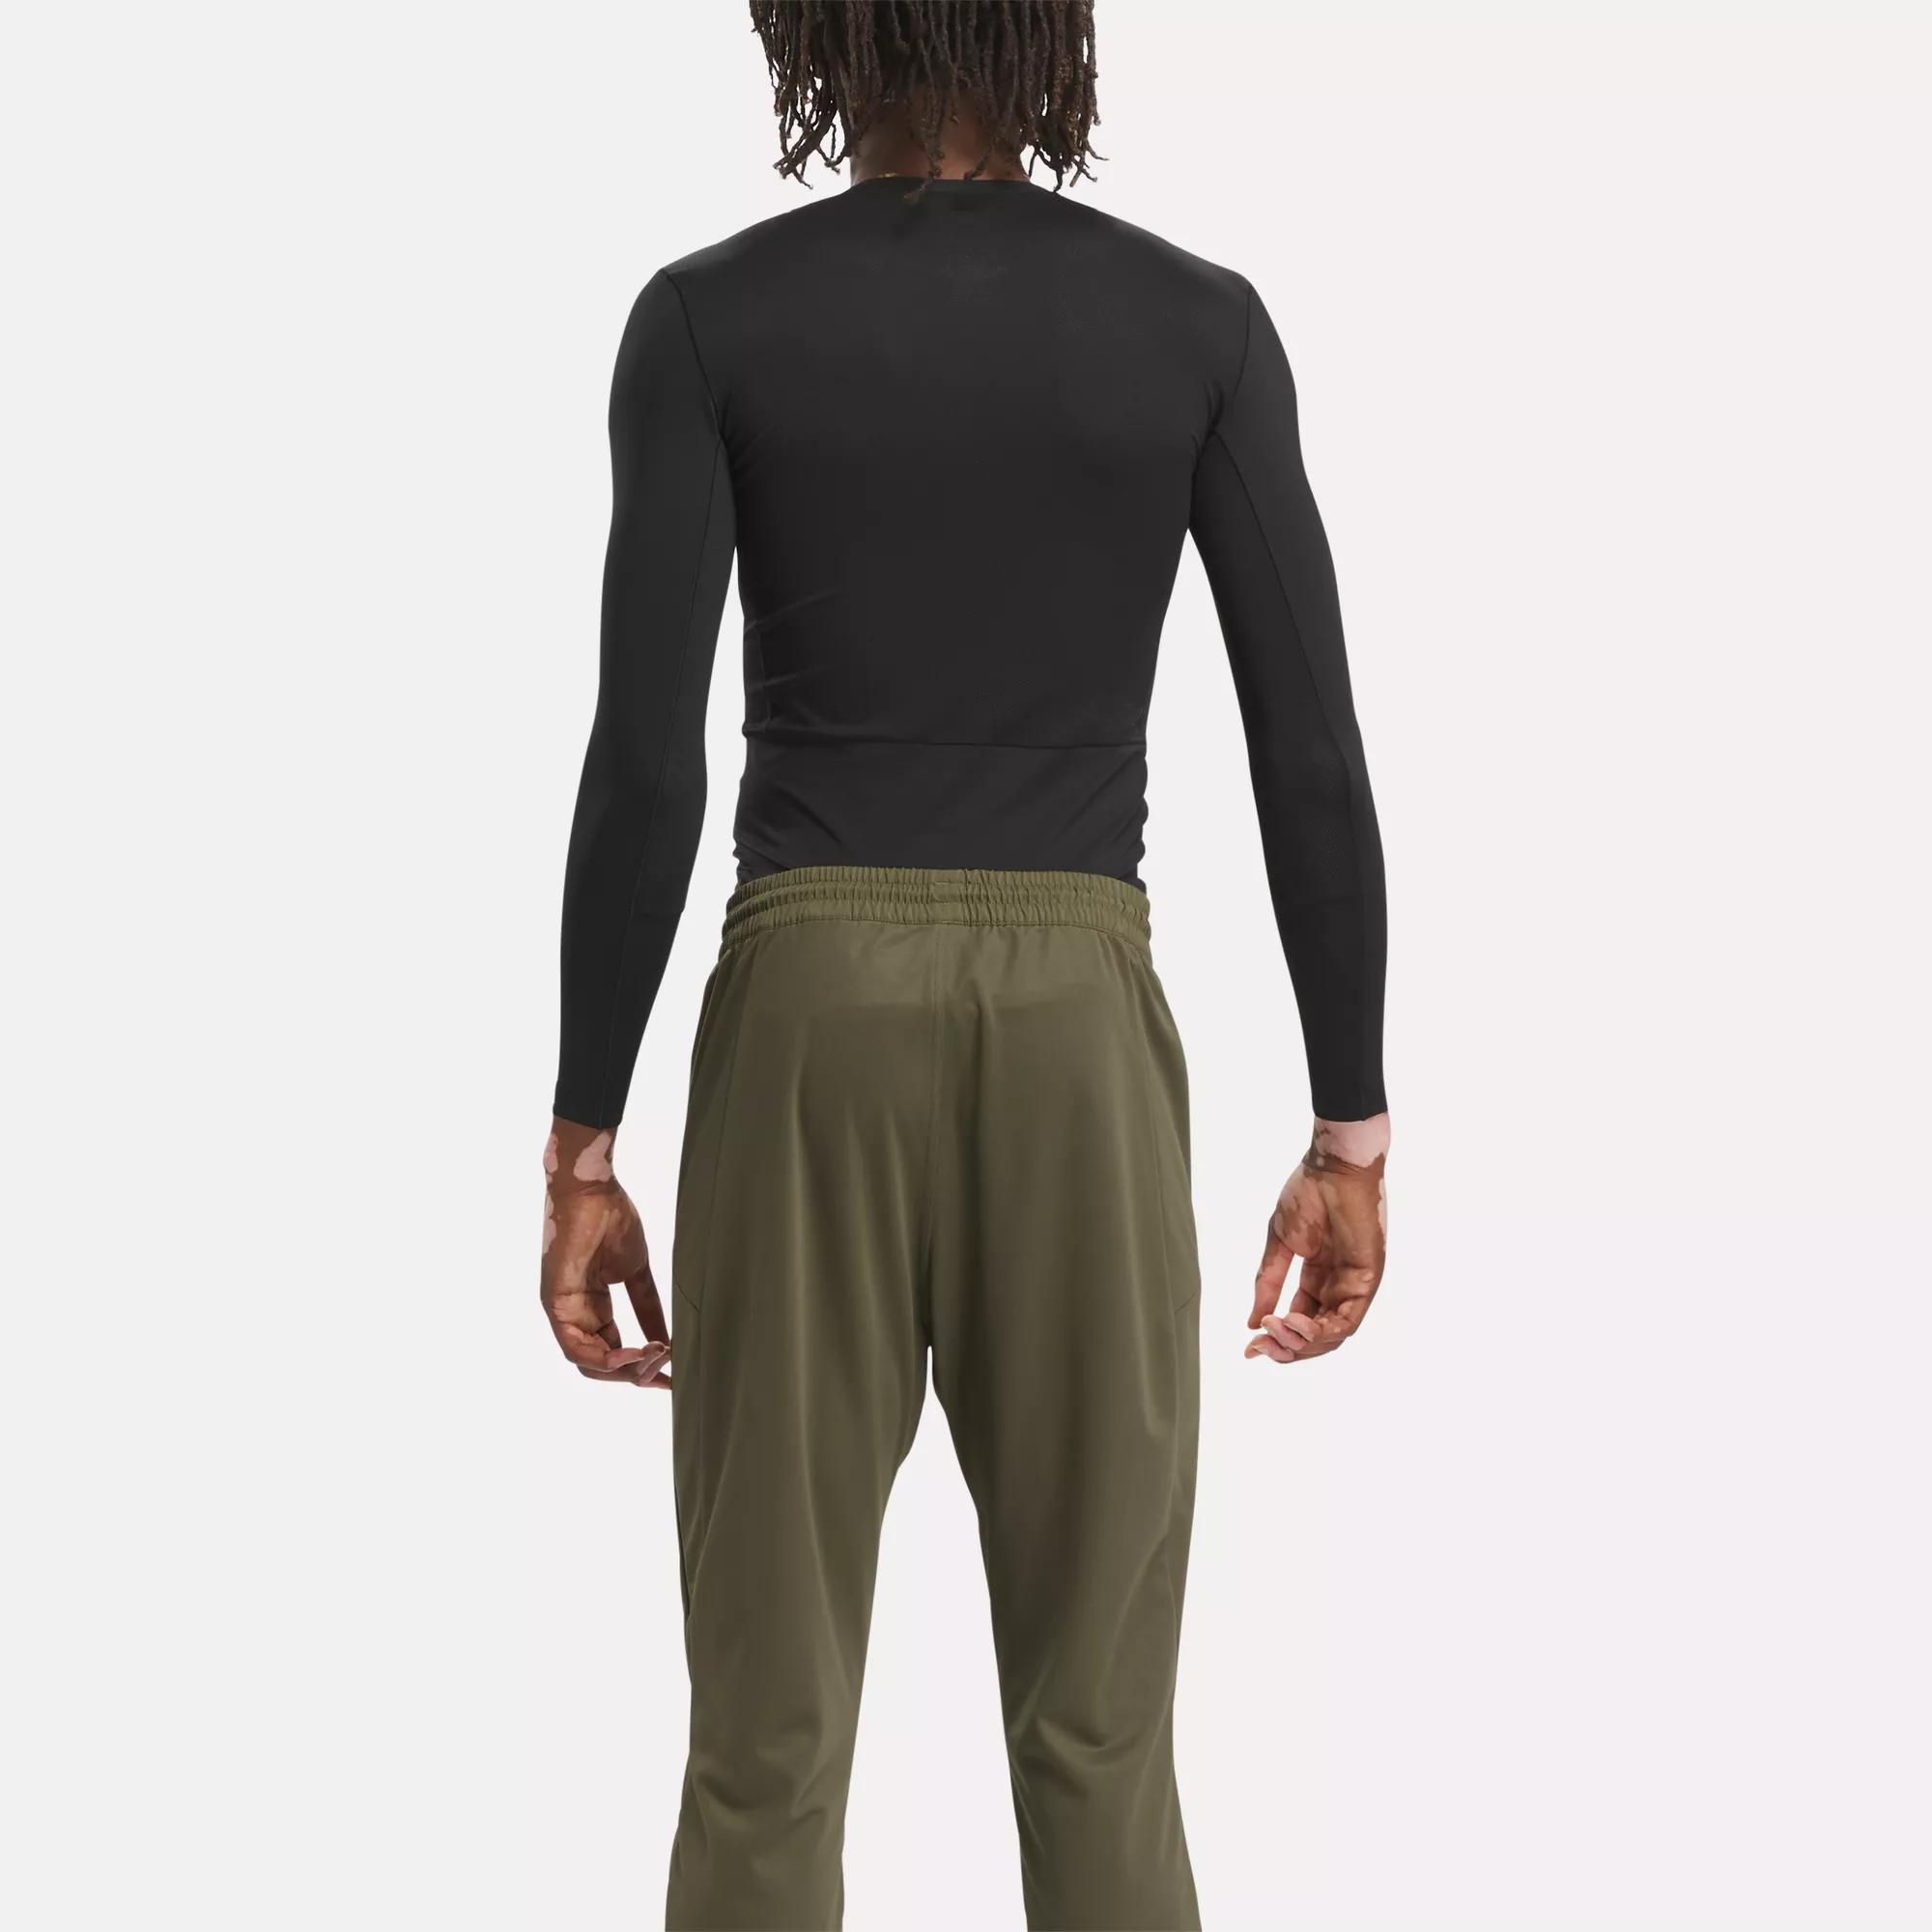  Reebok Boys' Thermal Underwear Set – Performance Base Layer  Long Sleeve T-Shirt and Leggings (S-L), Size Medium, Black: Clothing, Shoes  & Jewelry